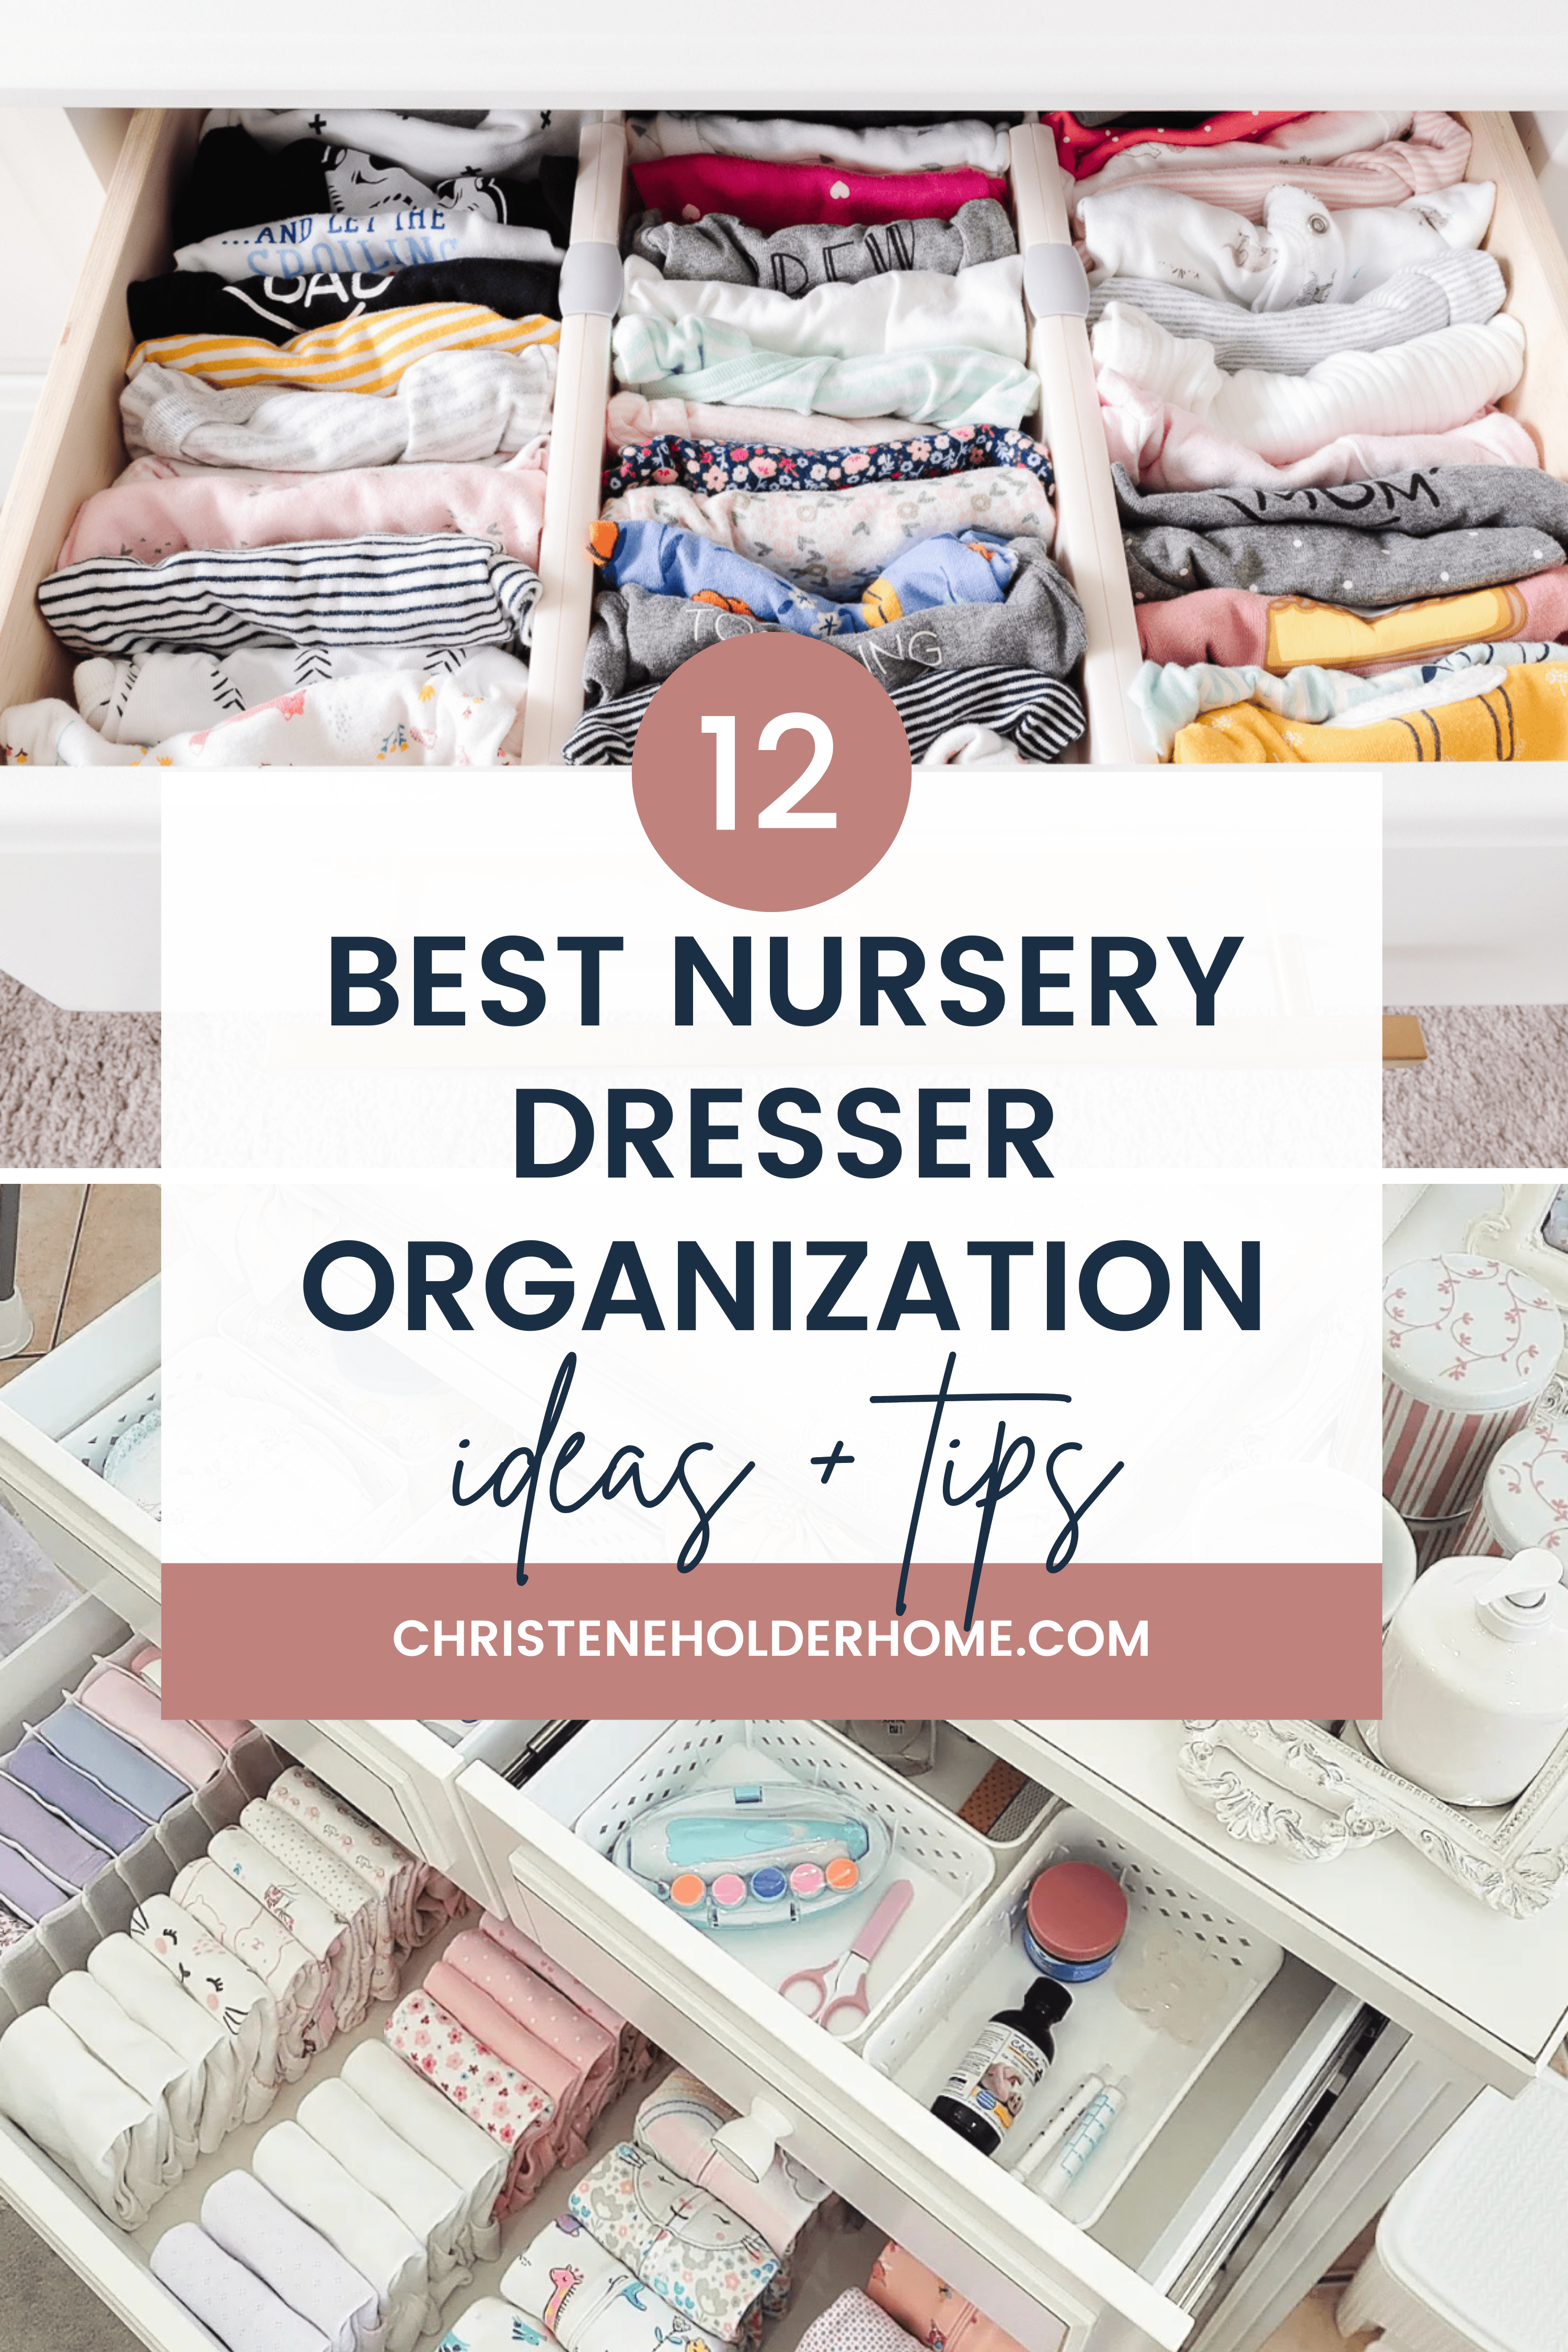 Nursery Dresser Organization: Tips to Store Clothes